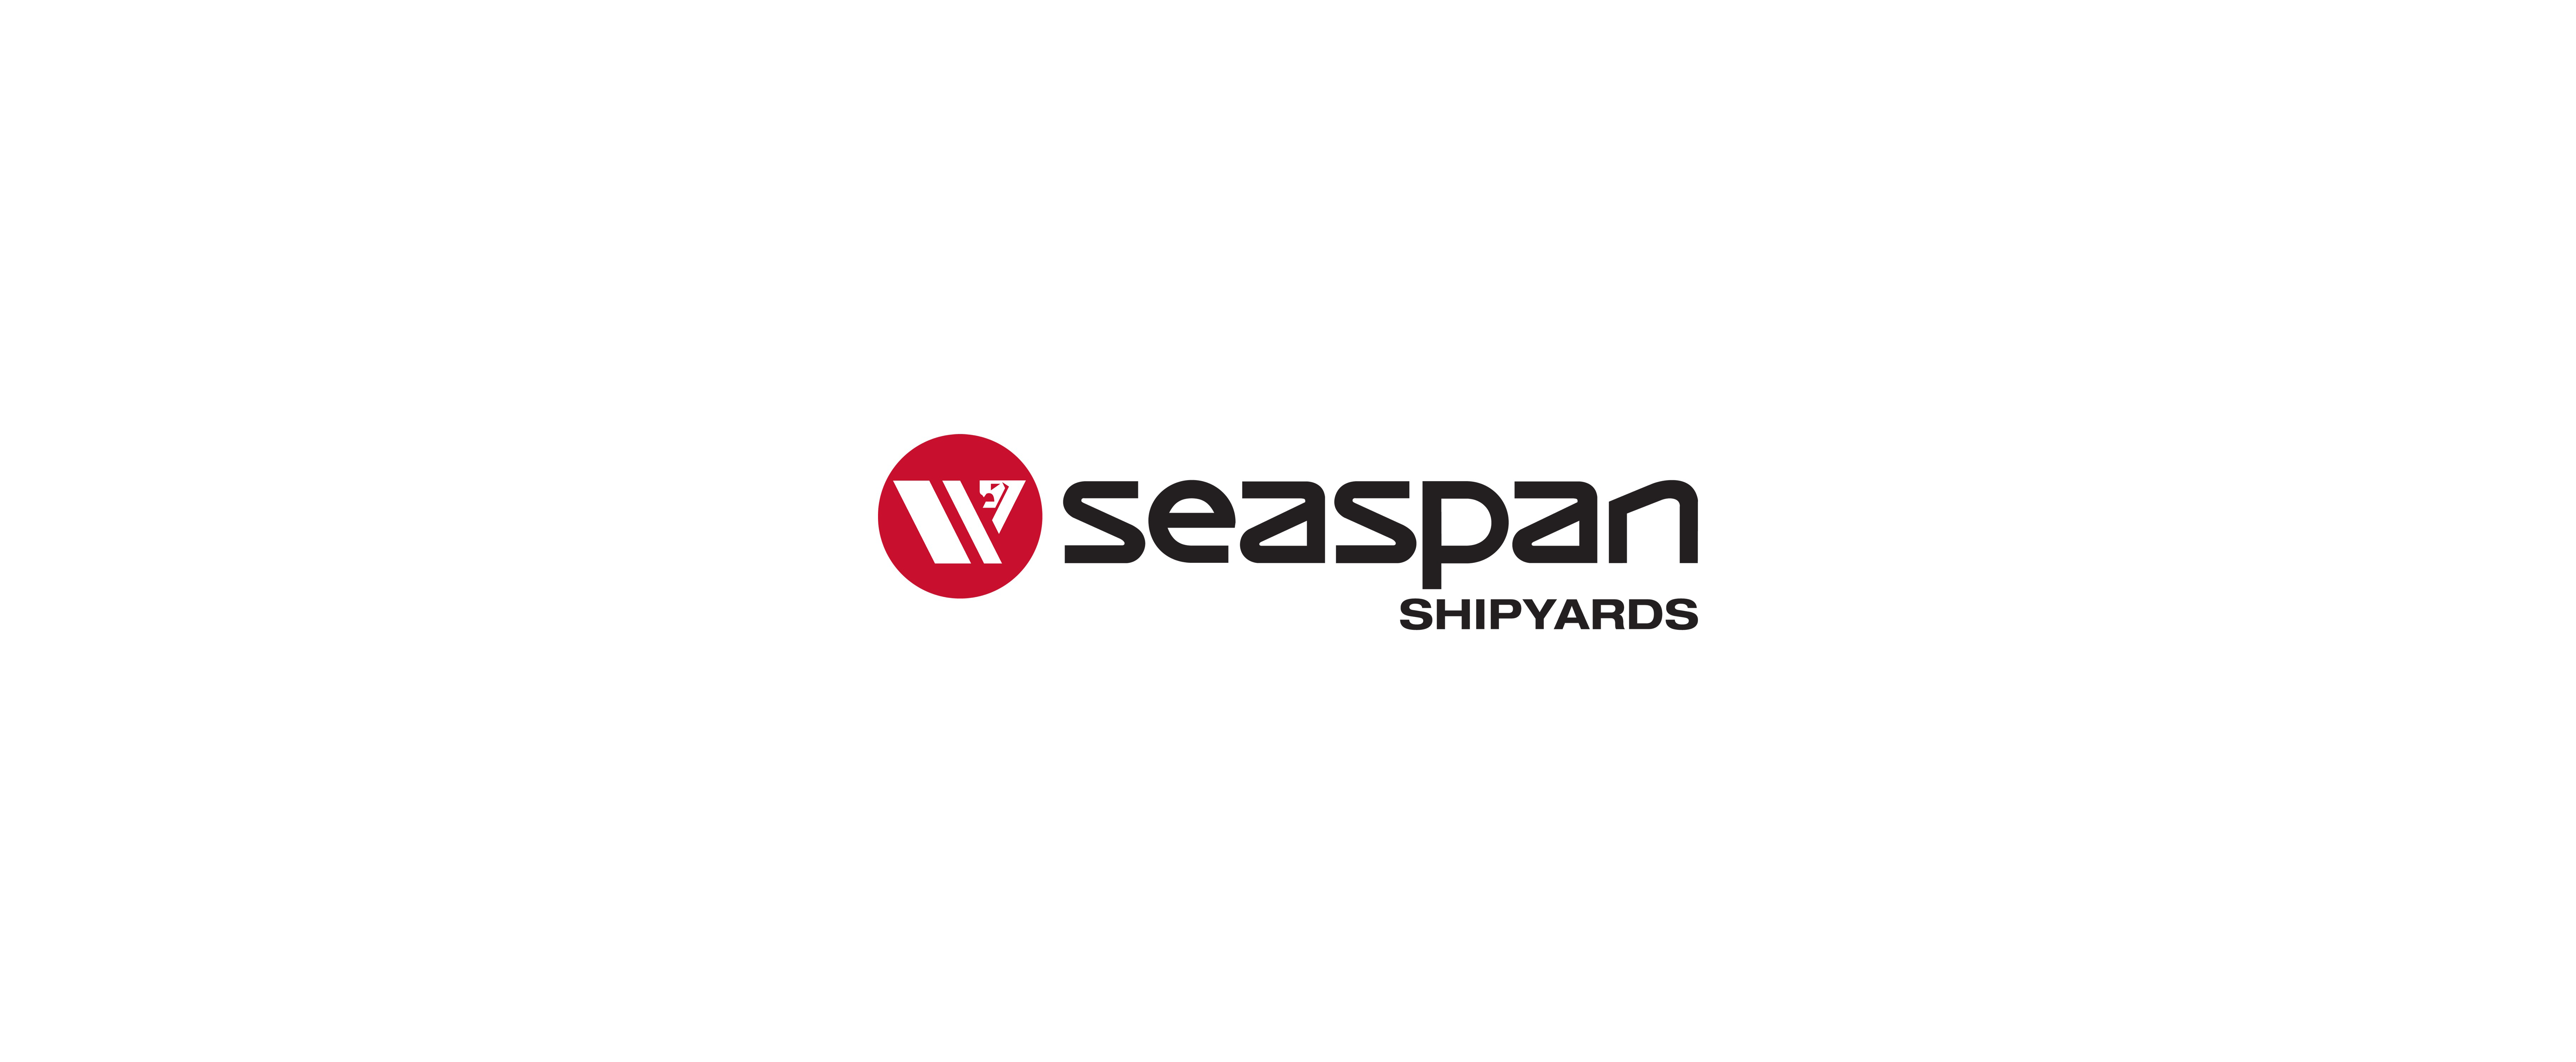 Seaspan Shipyards Announces New CEO - Seaspan